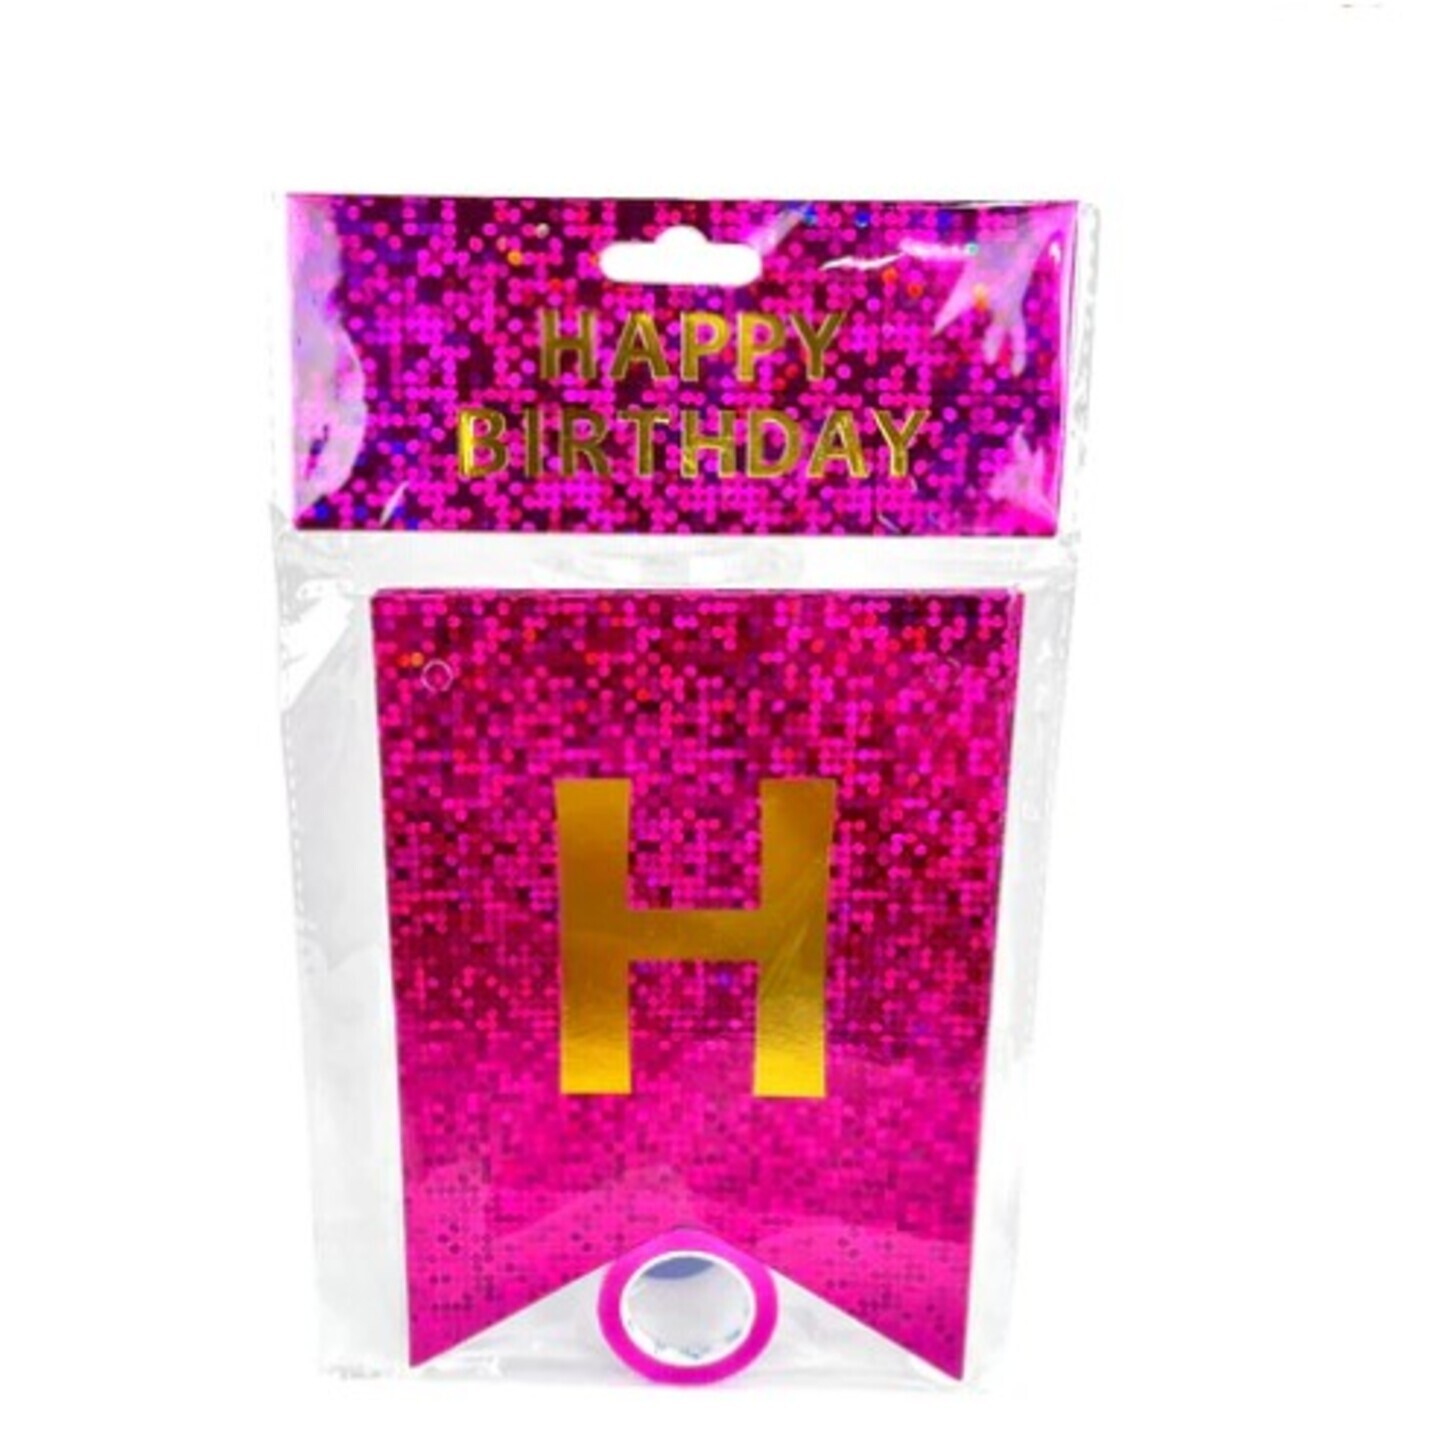 Holographic Happy Birthday Banner Flag - PURPLE